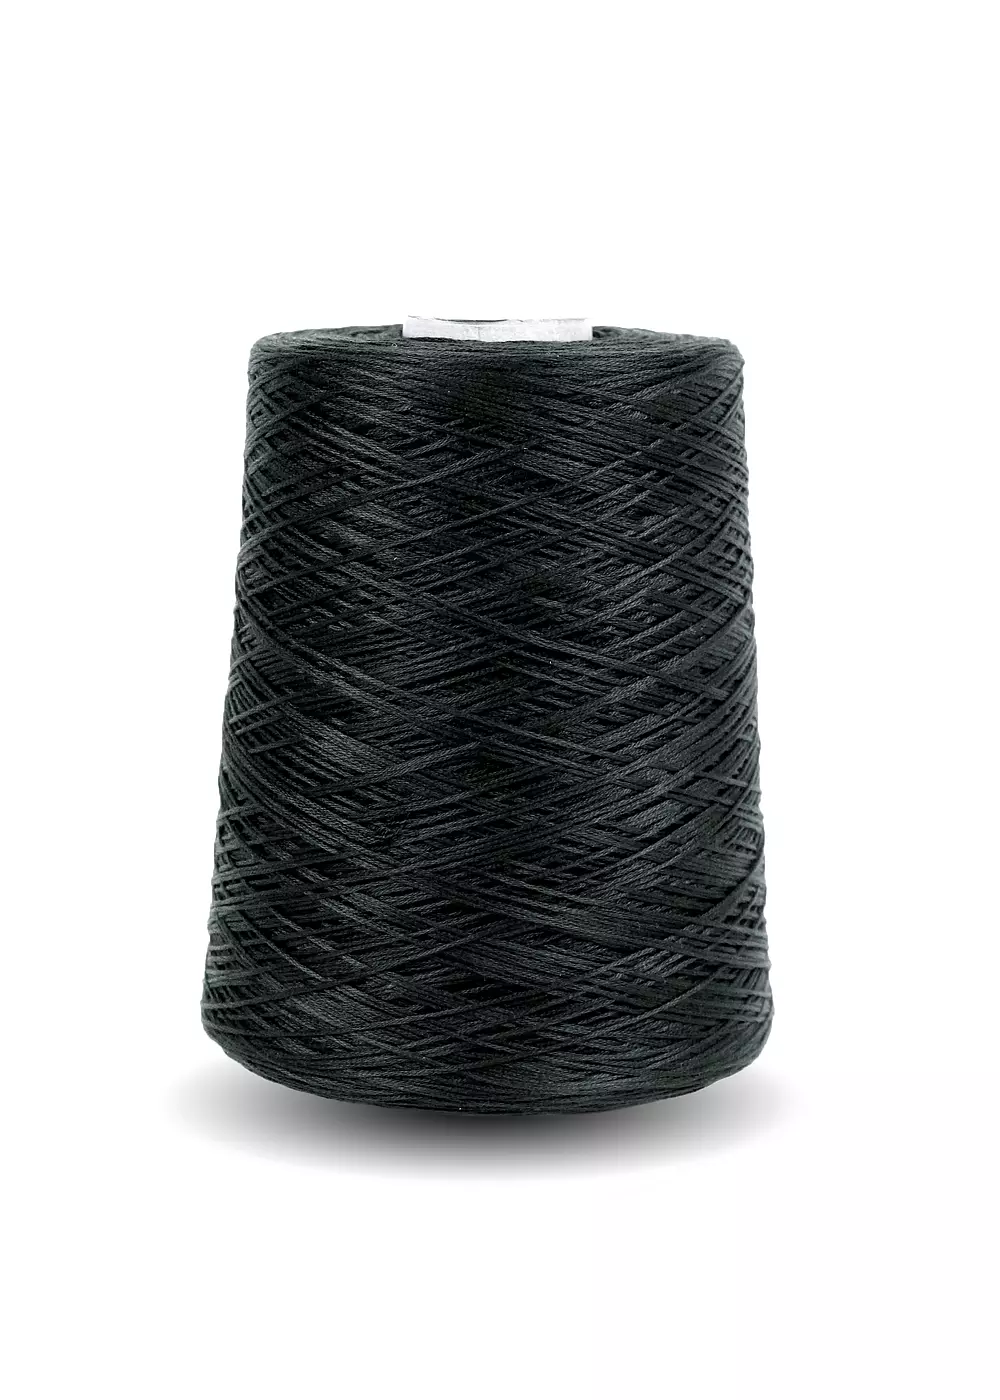 Black Colours DMC Stranded Cotton Embroidery Thread Set of 3 Skein Black  Embroidery Thread DMC 310 DMC Floss Pack Black Bundle 